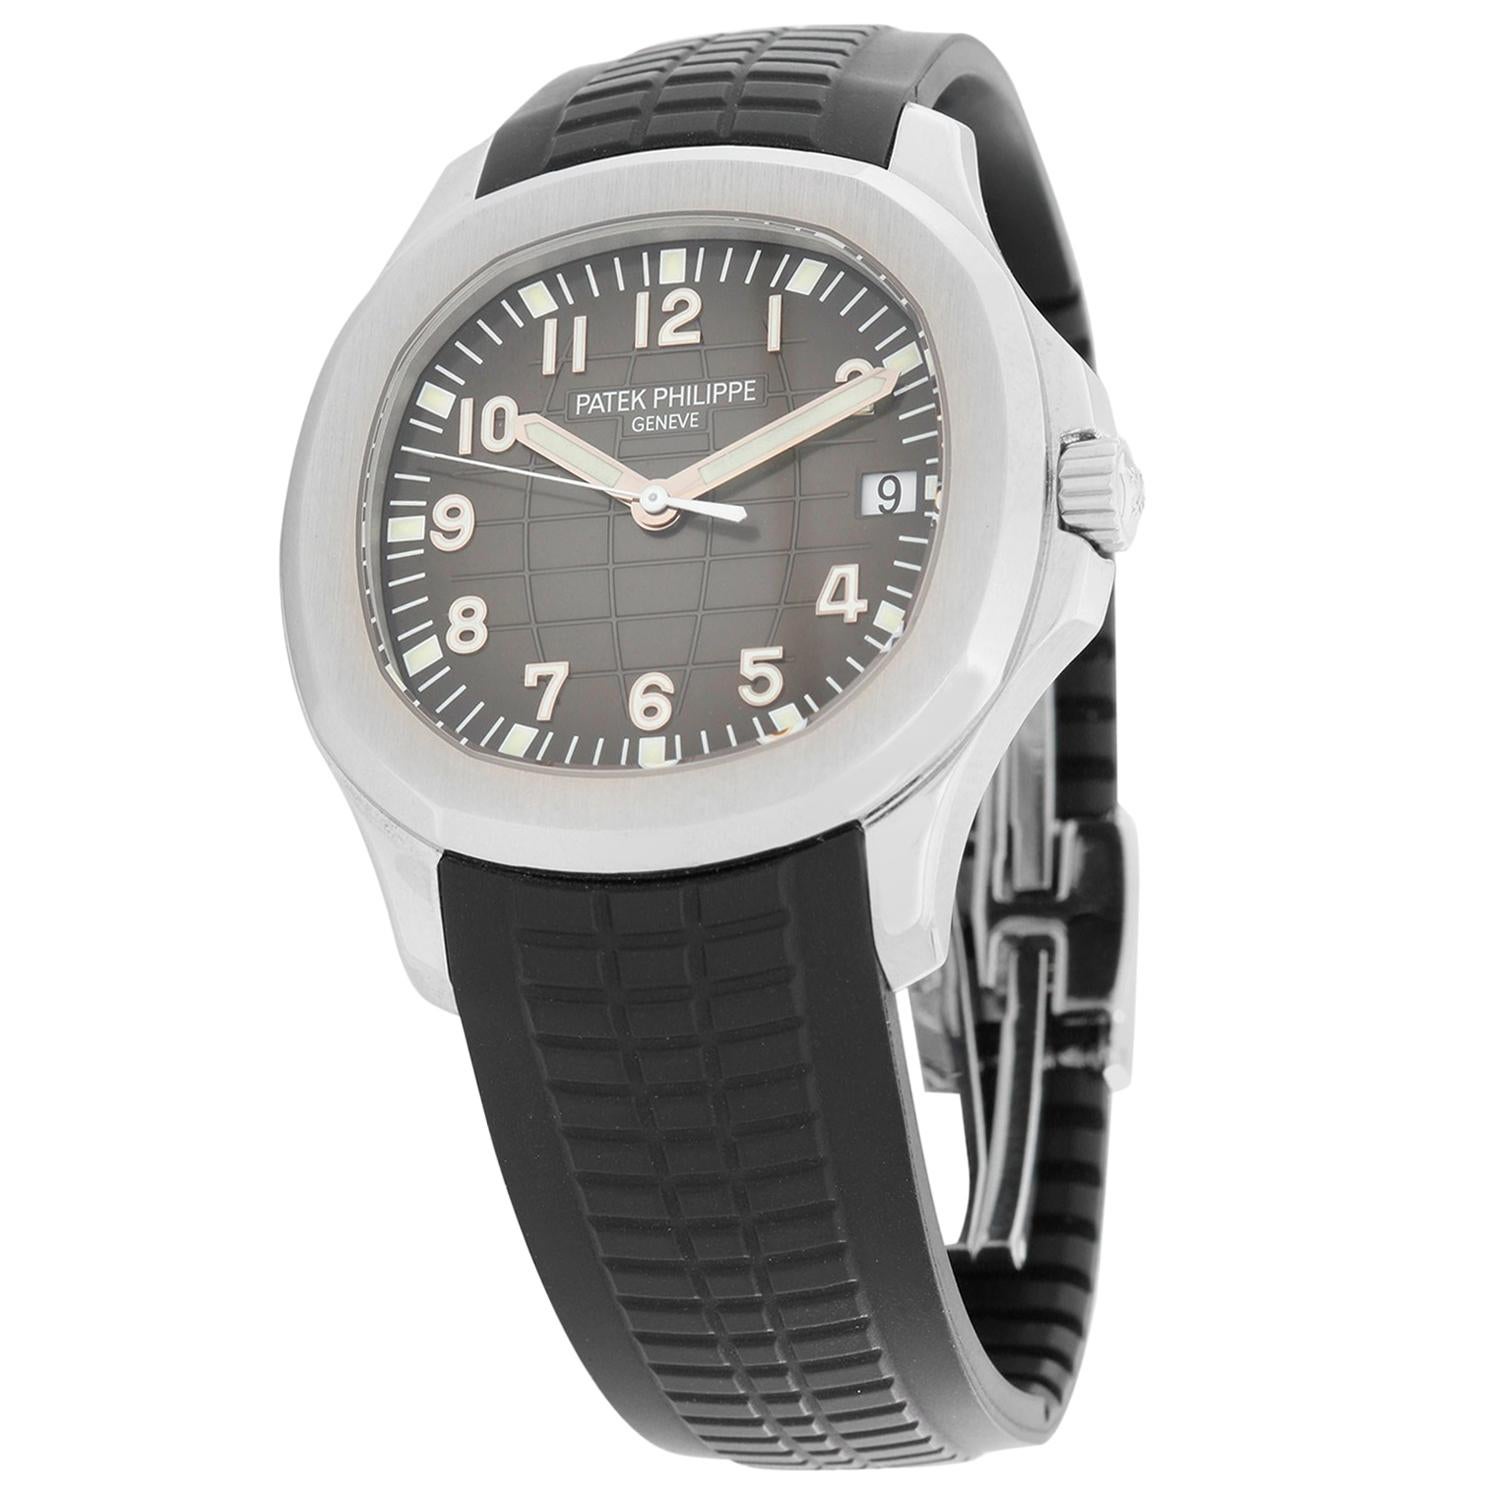 Patek Philippe Aquanaut Men's Stainless Steel Watch 5167A - 001